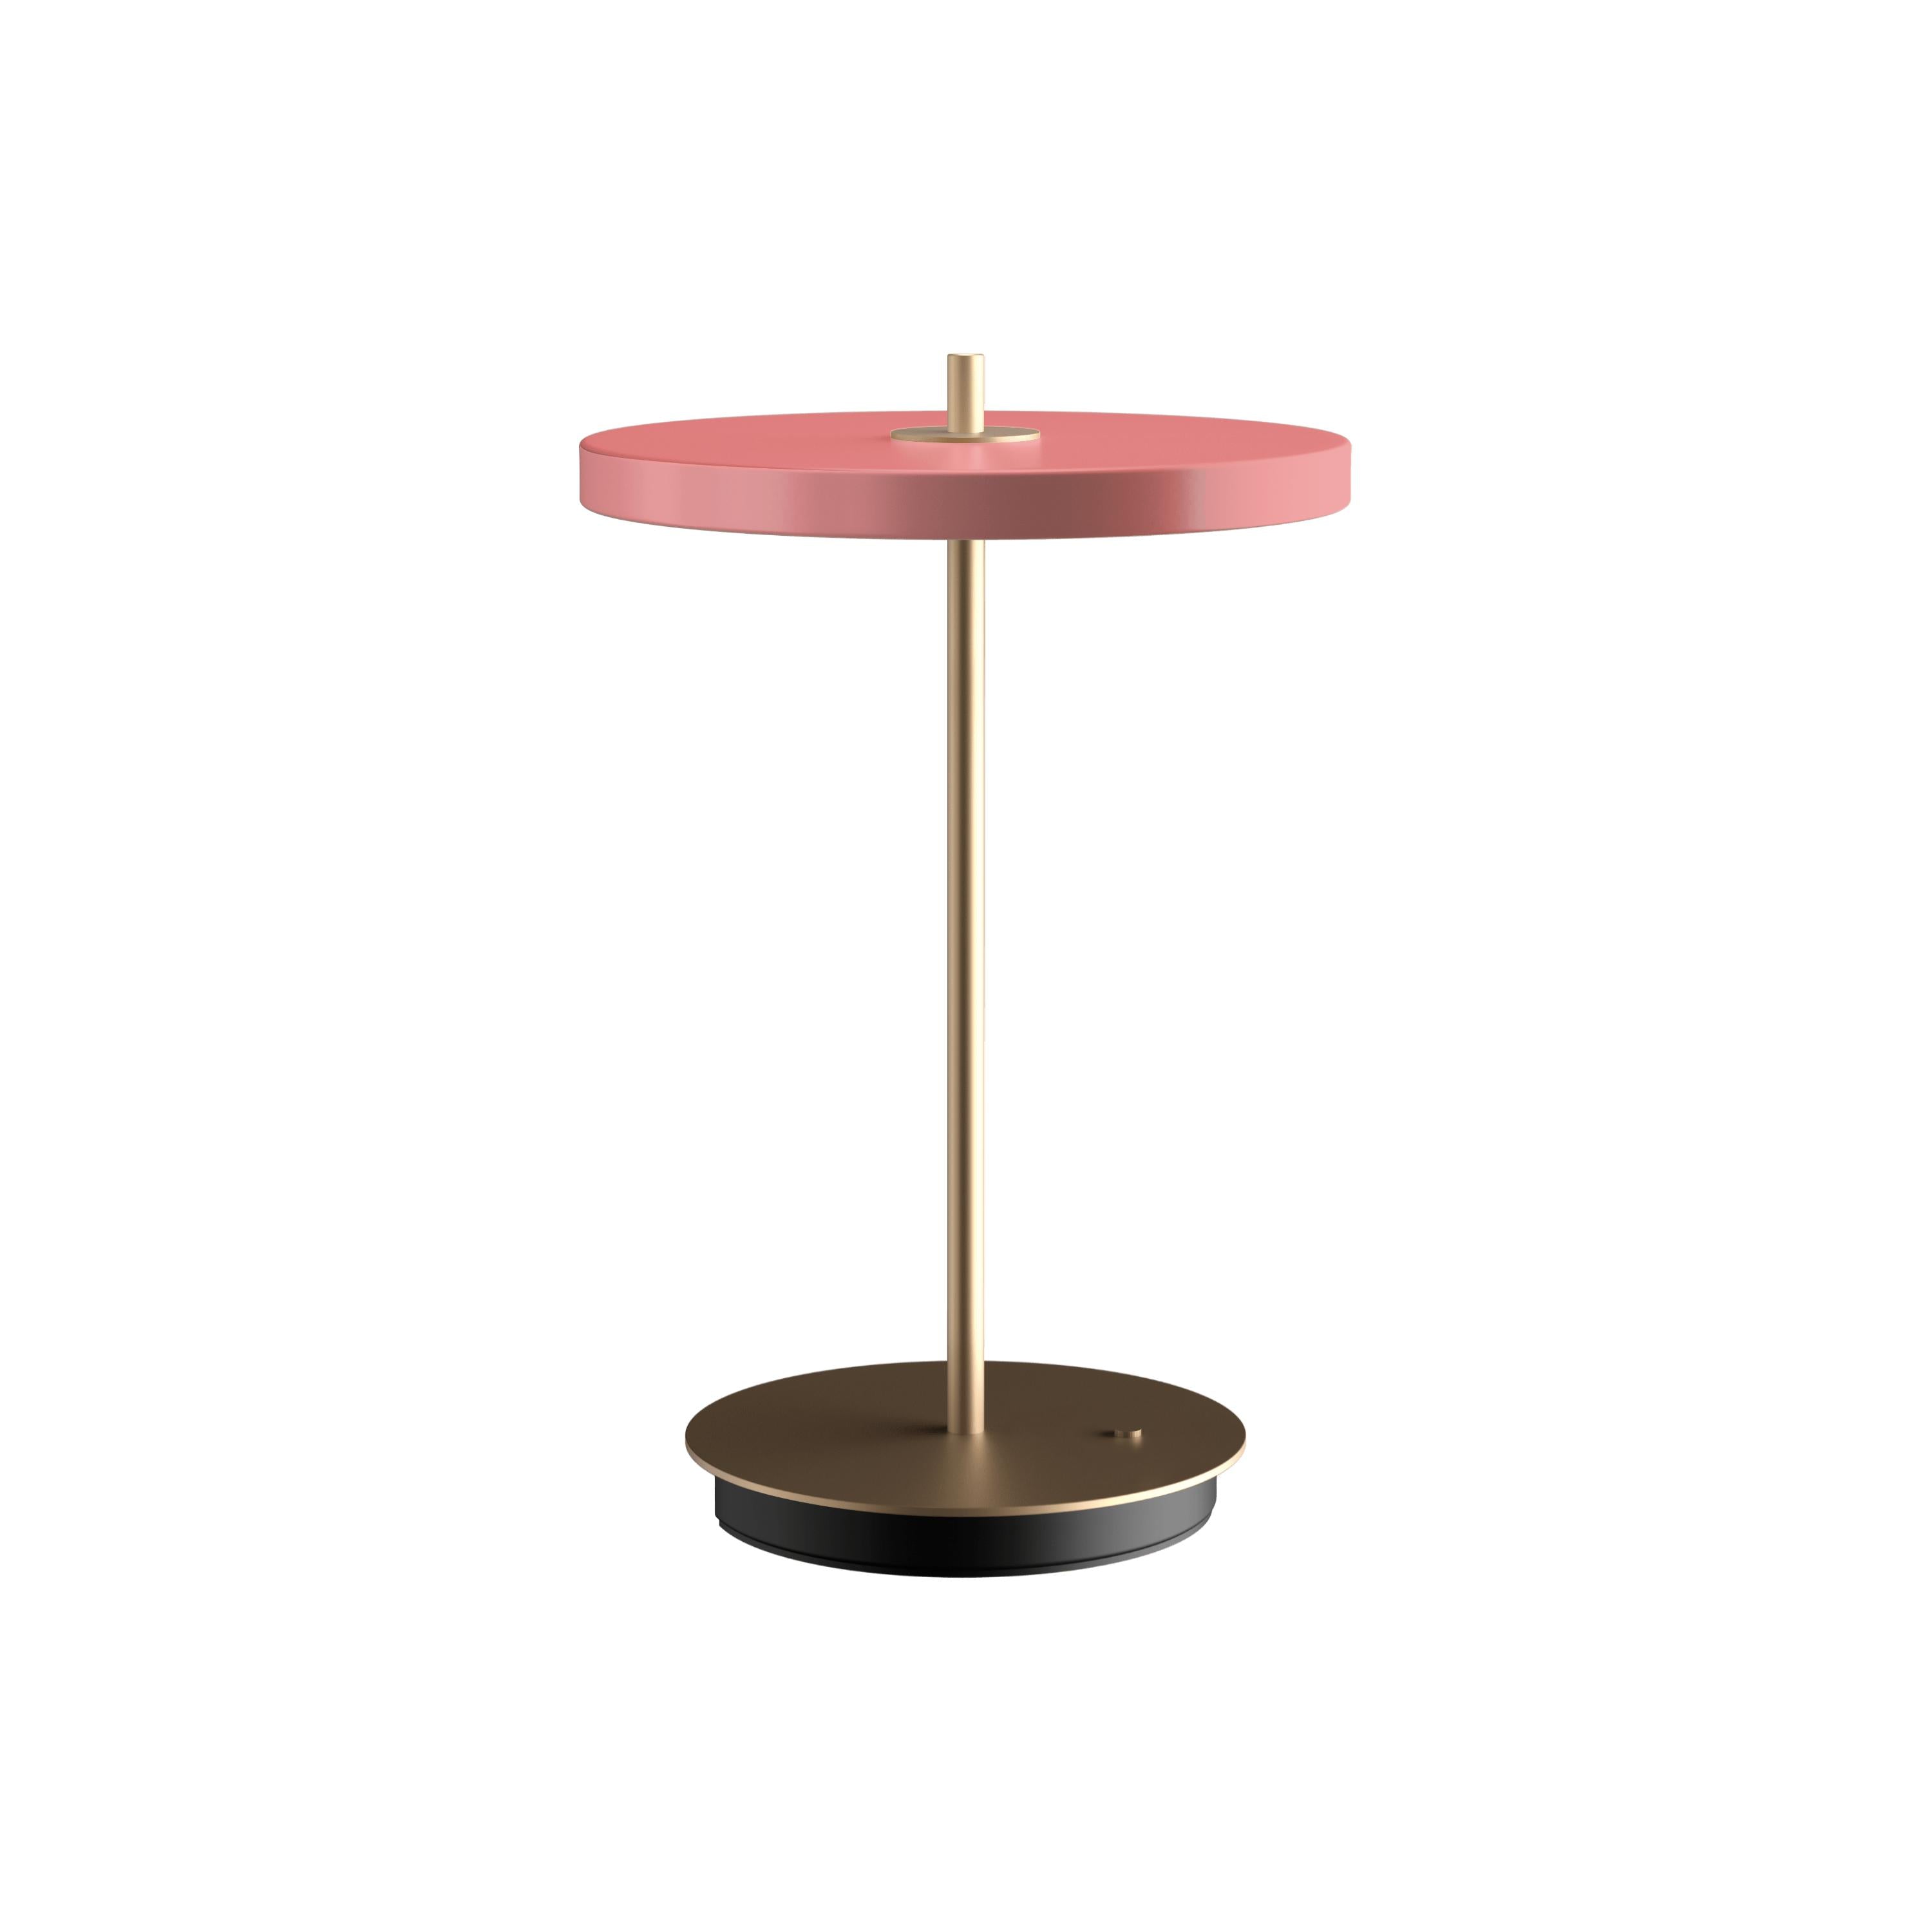 UMAGE ASTERIA MOVE LAMP TABLE, NUANCE ROSE V2